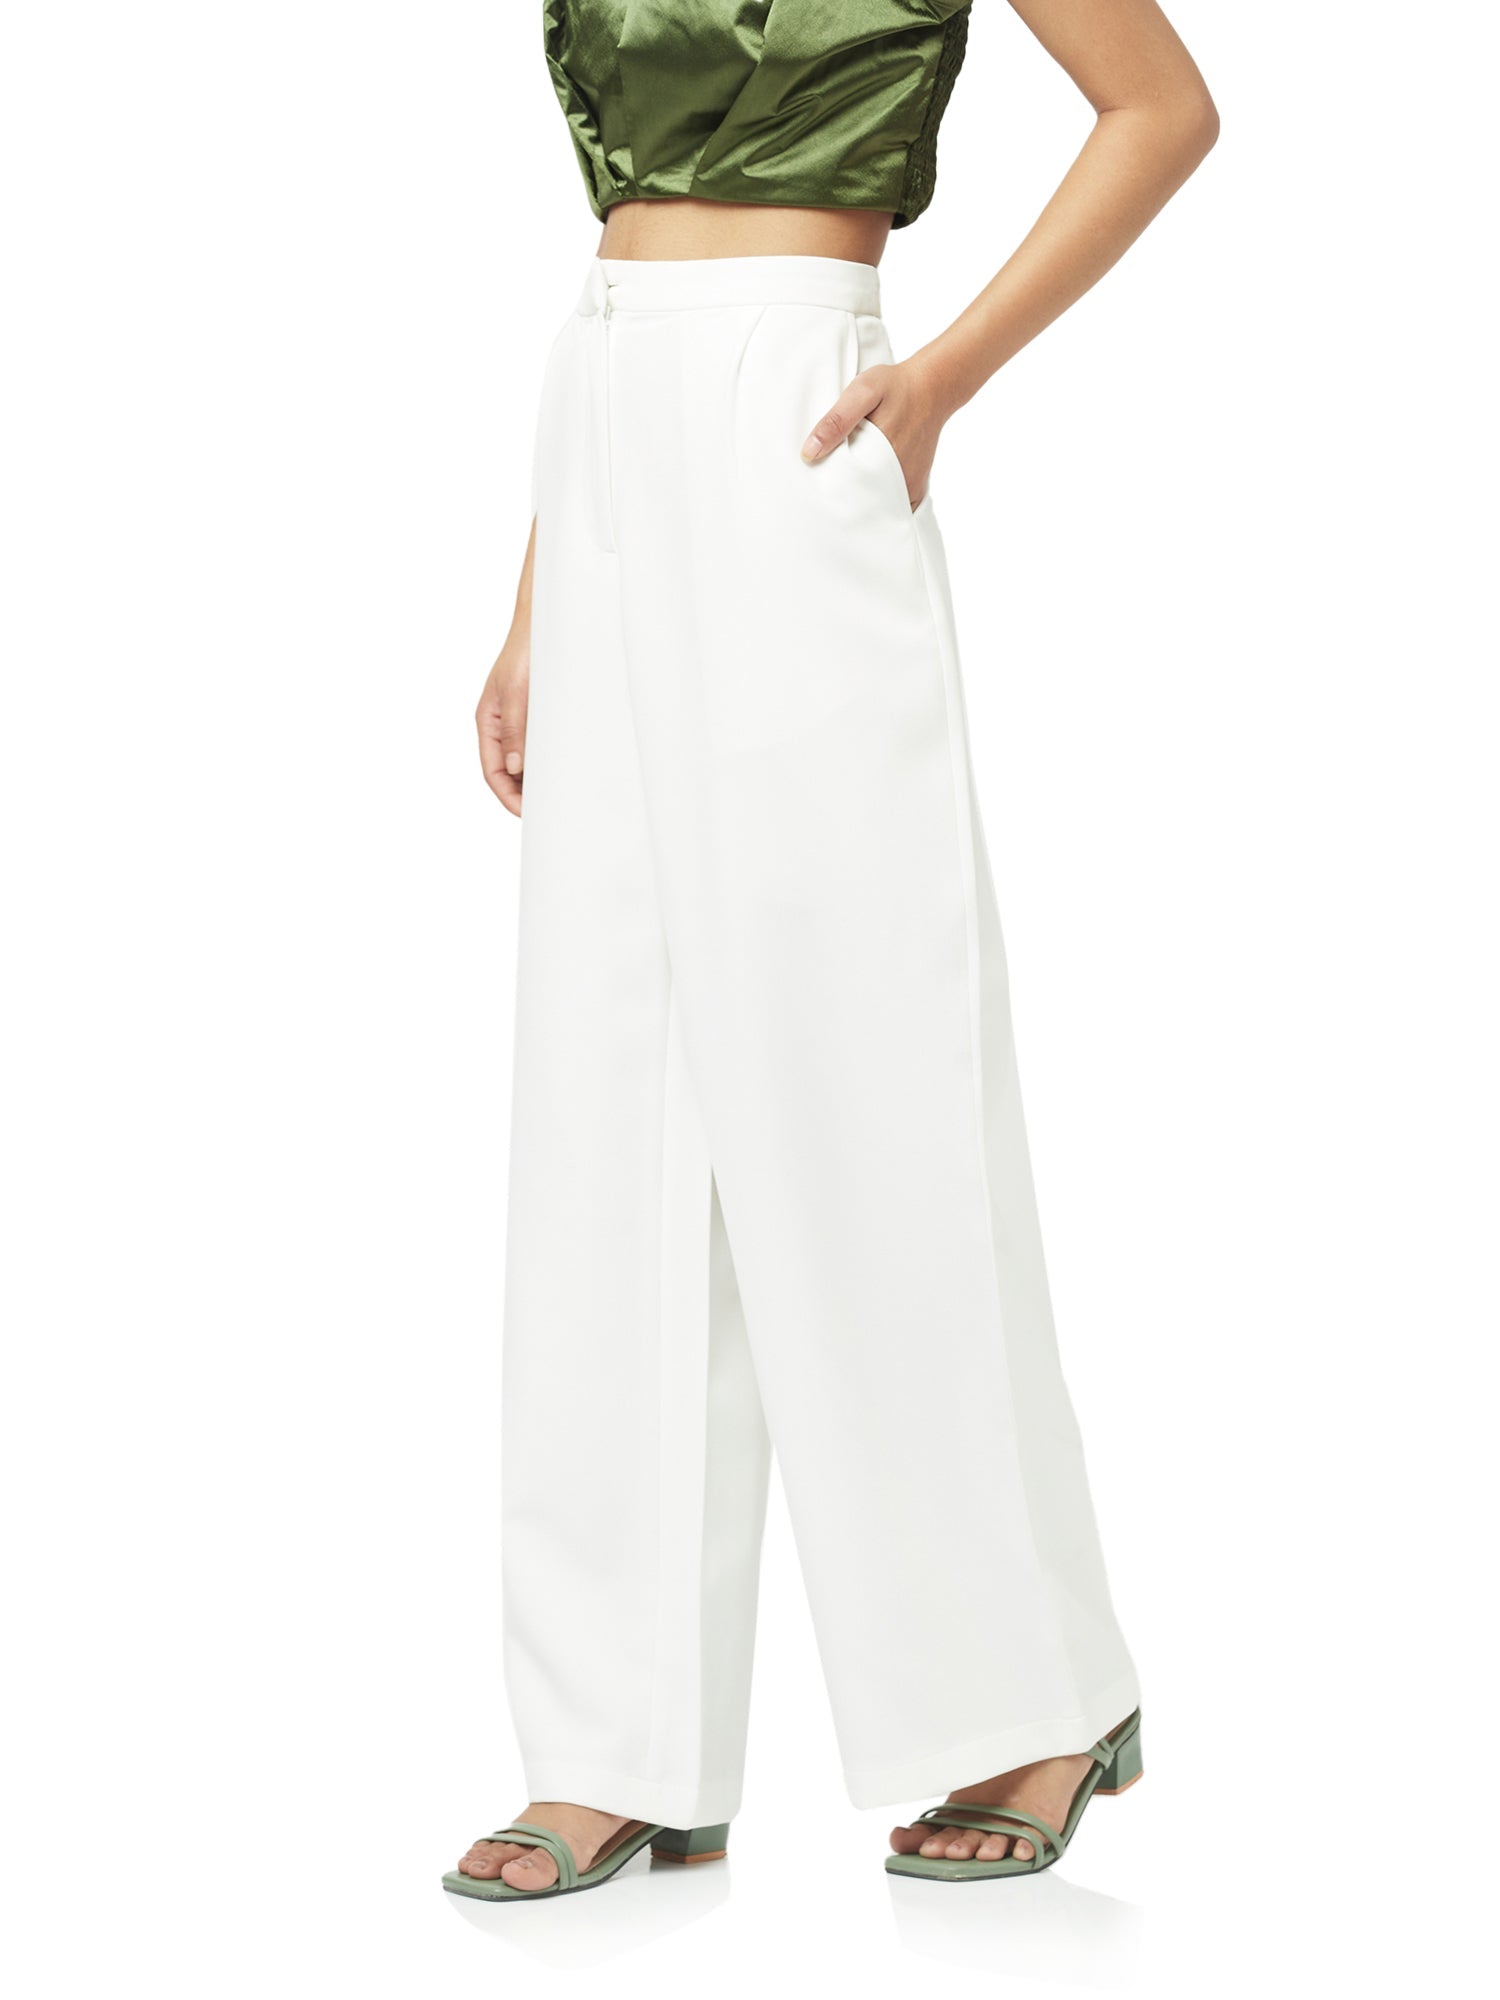 classic white dress pant  